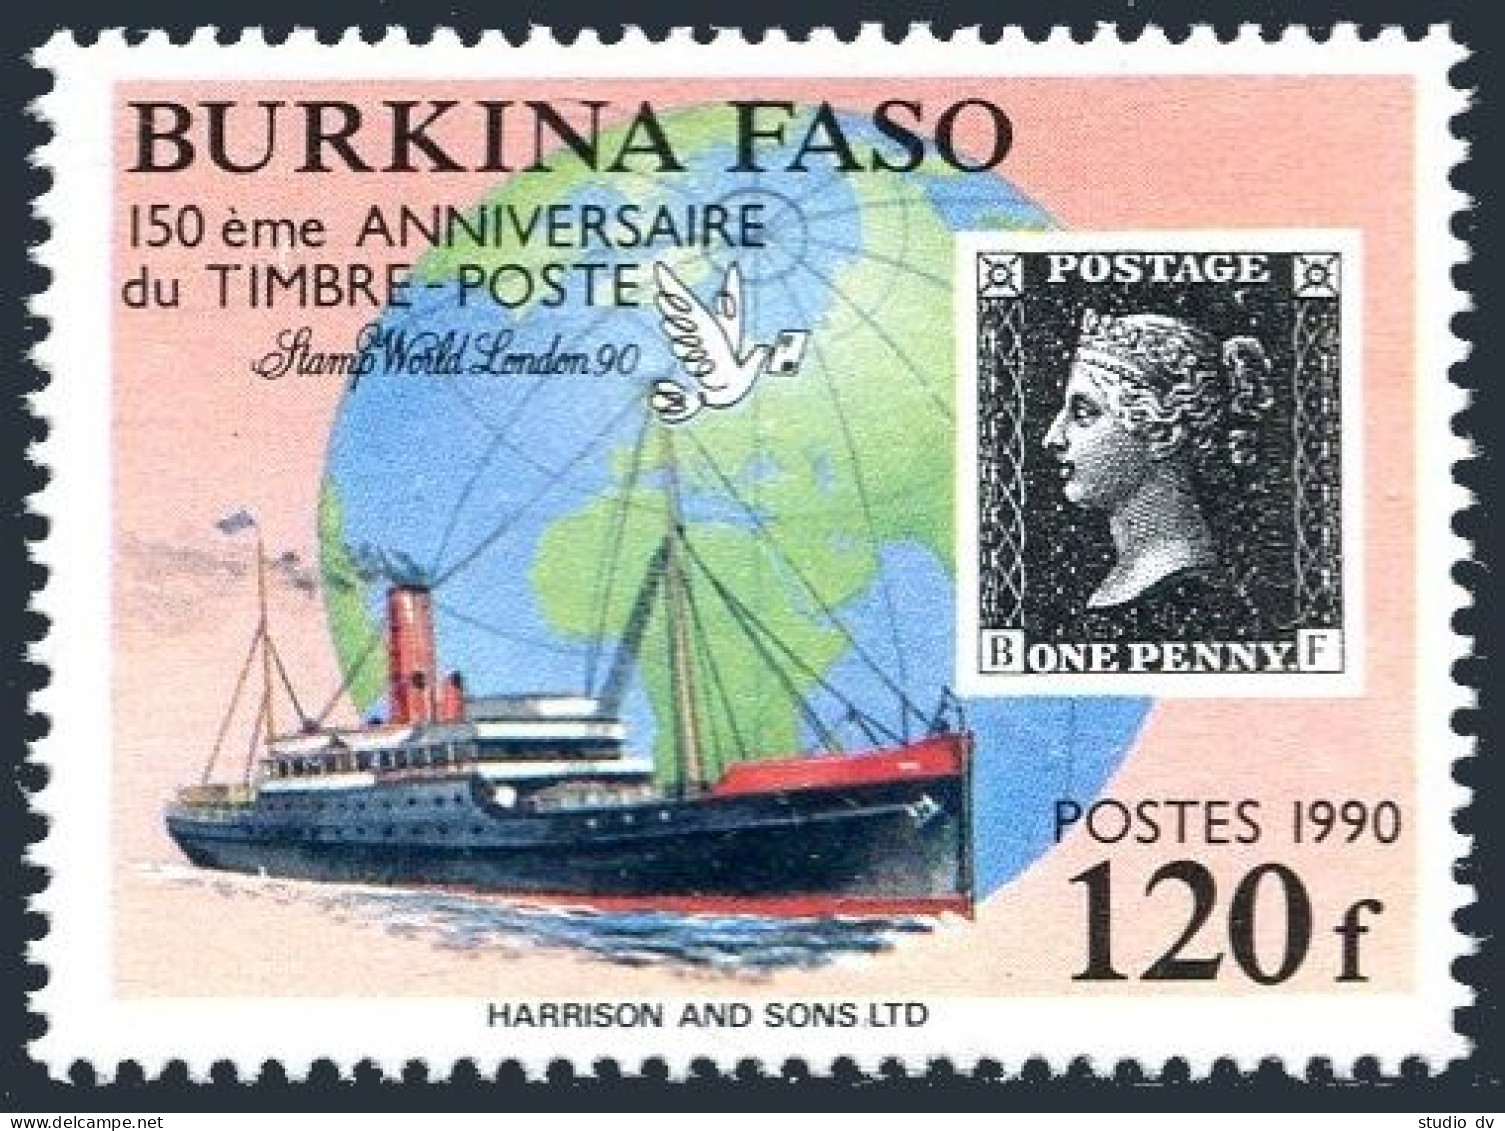 Burkina Faso 889,MNH. Mi 1224. Postage Stamp, 150th Ann.1990. Penny Black, Ship. - Burkina Faso (1984-...)